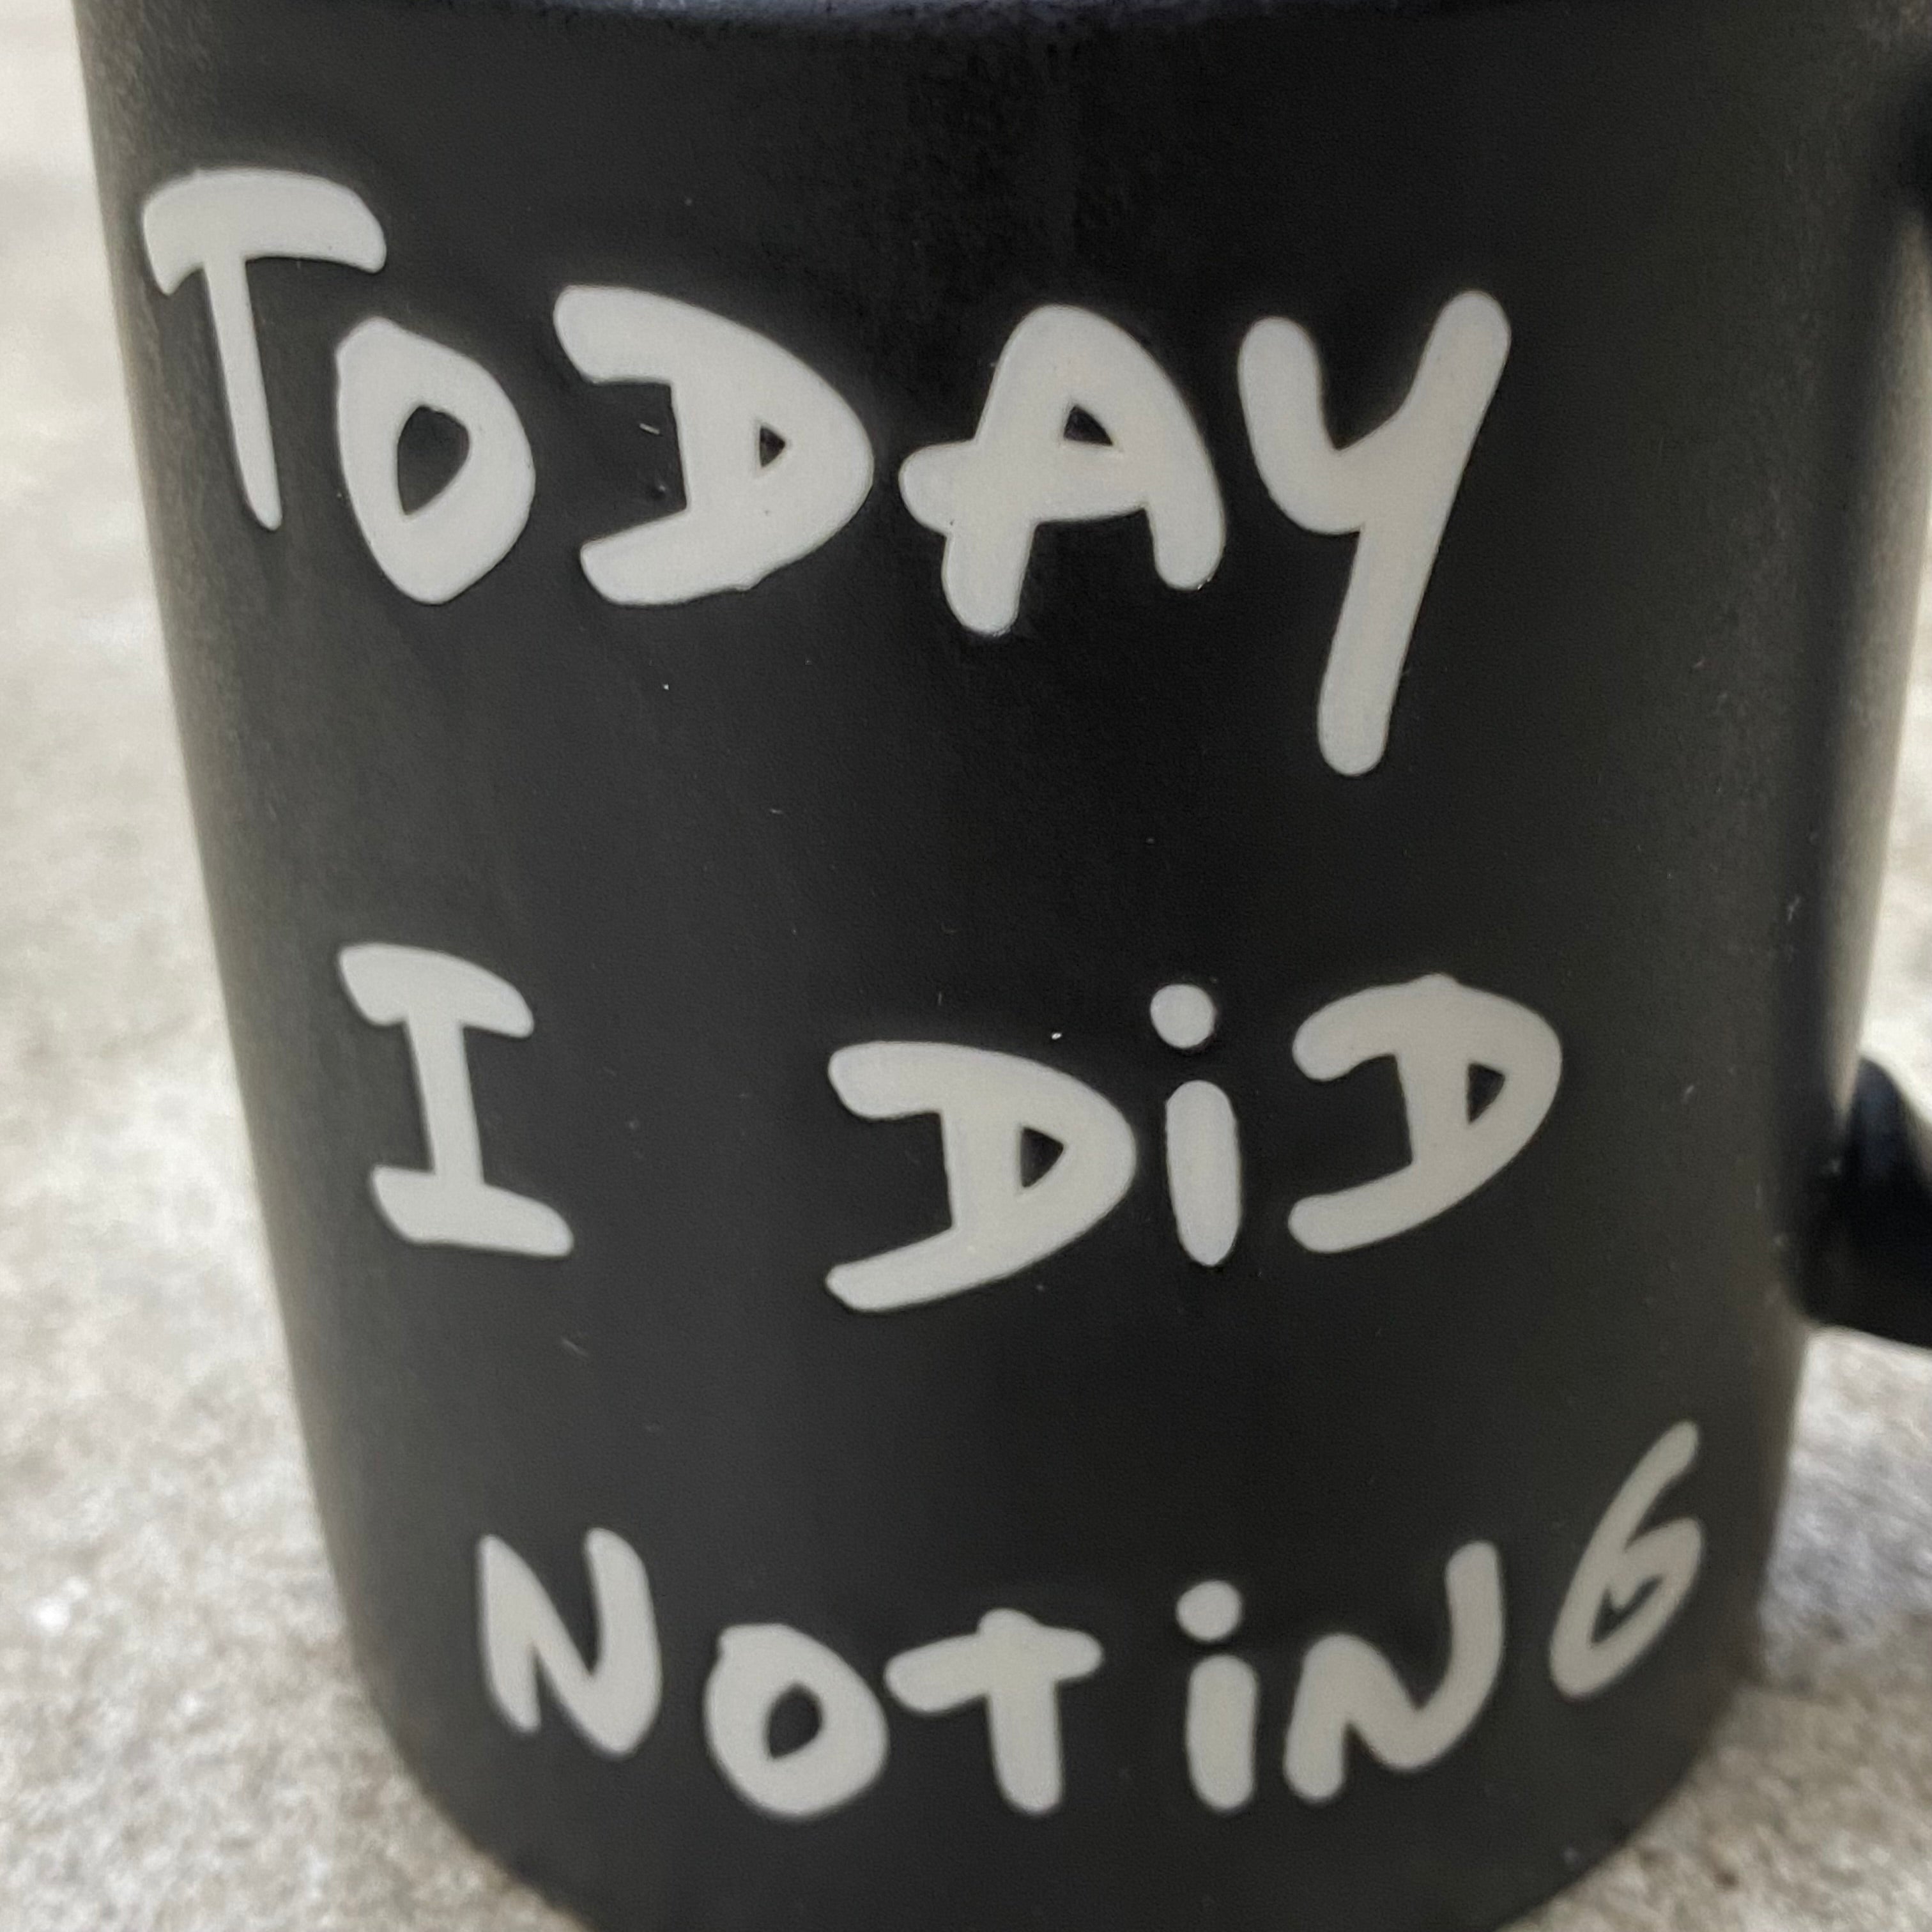 Do Nothing Congress Mug Cup DNC x Thomas Lelu Pull " TODAY I DID NOTING " / Do Nothing Congress